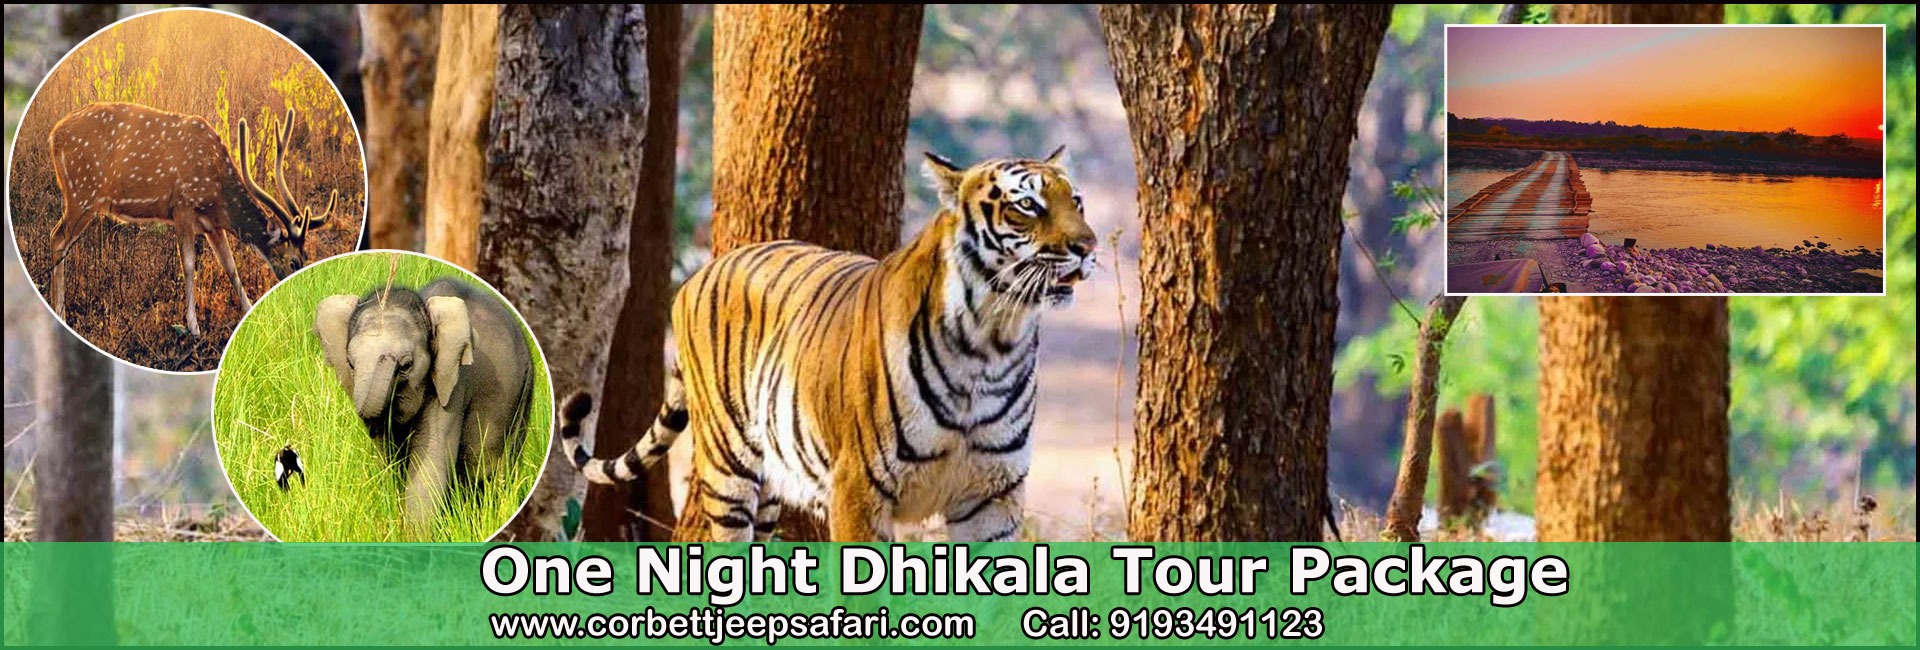 dhikala tour package